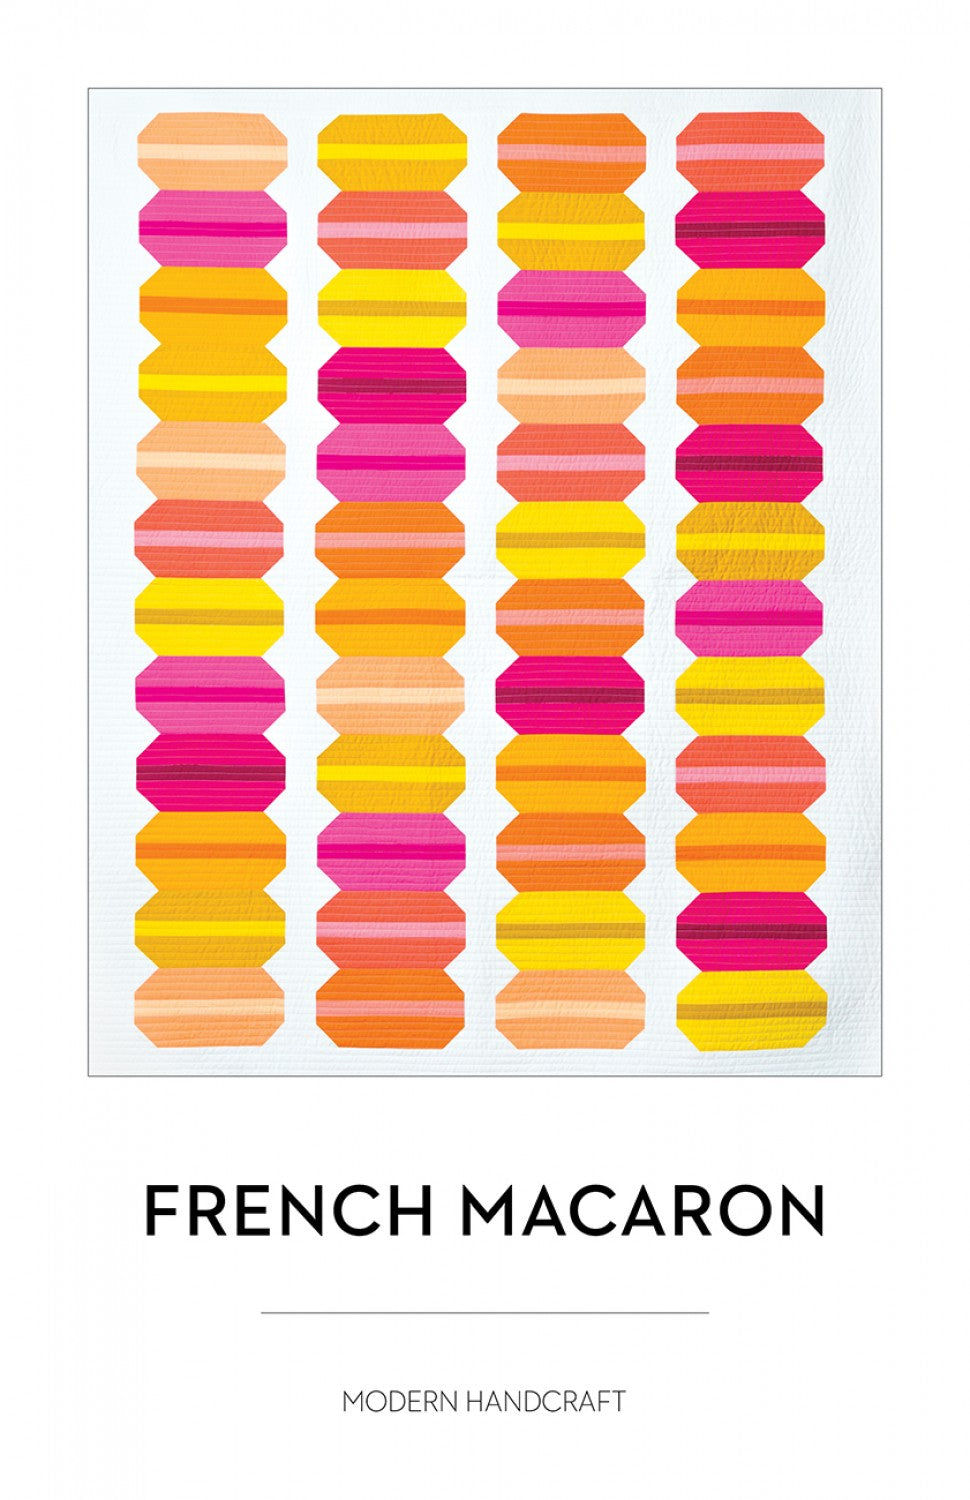 French Macaron by Modern Handcraft